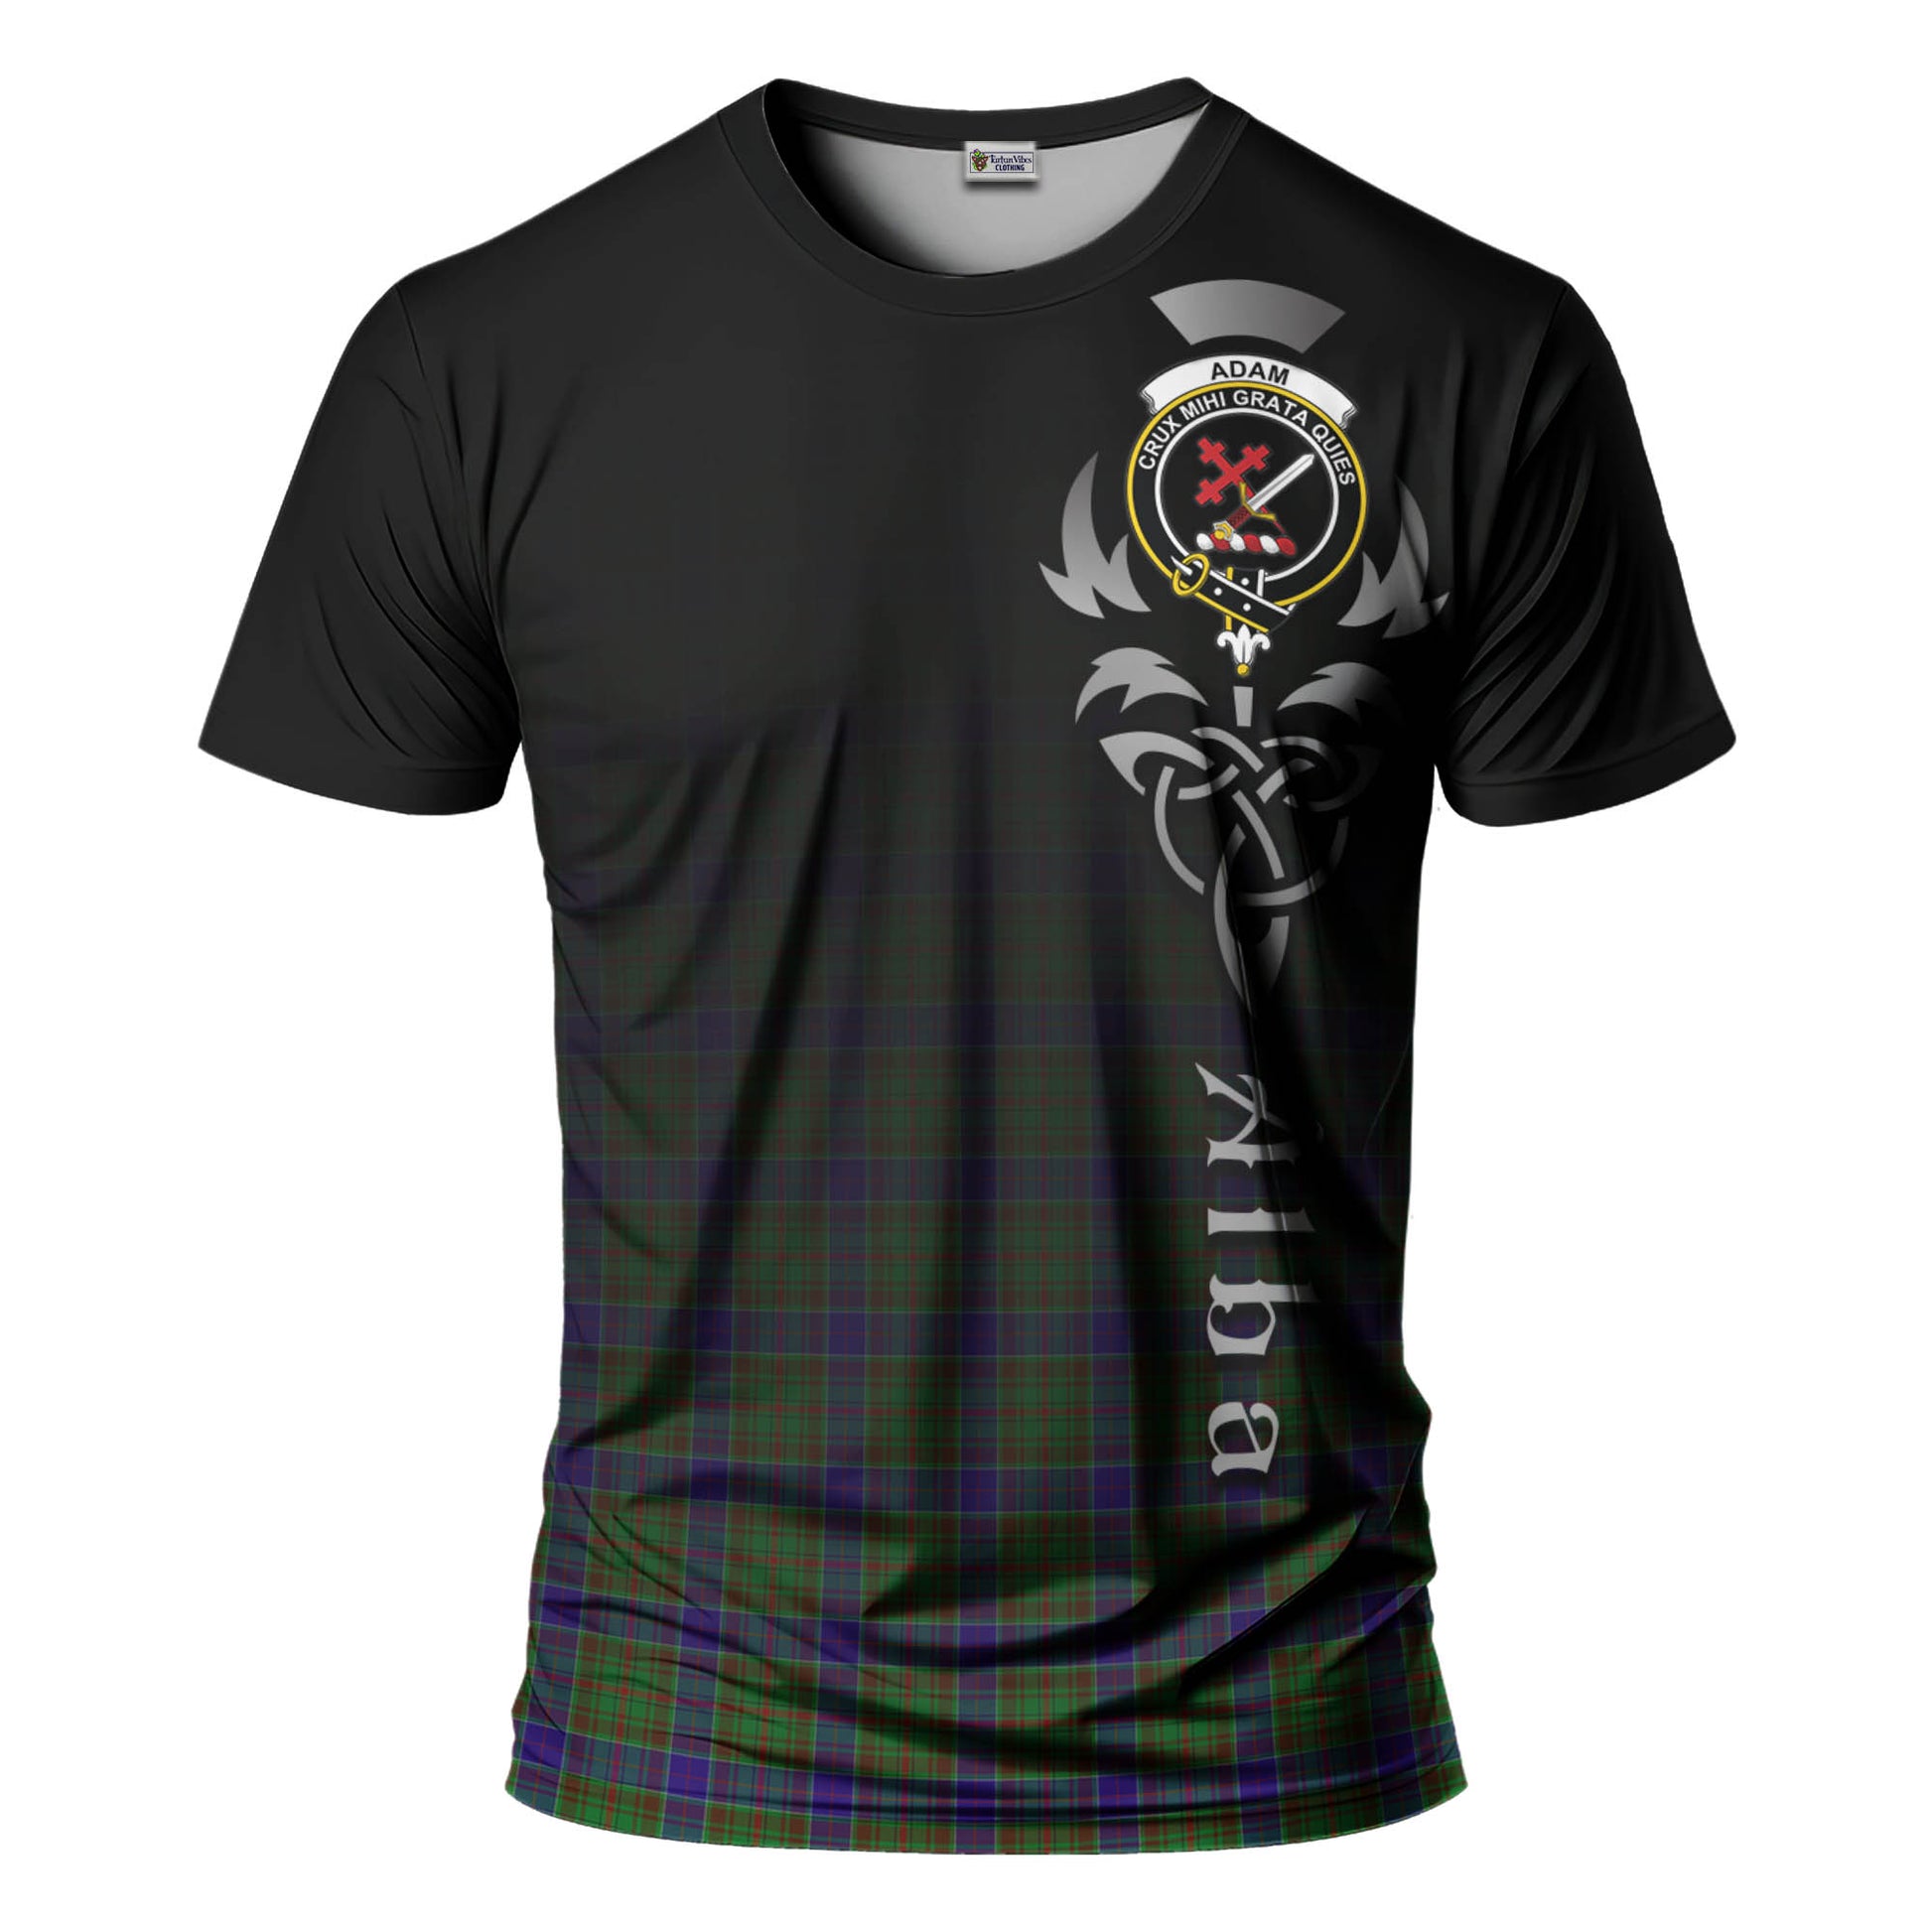 Tartan Vibes Clothing Adam Tartan T-Shirt Featuring Alba Gu Brath Family Crest Celtic Inspired